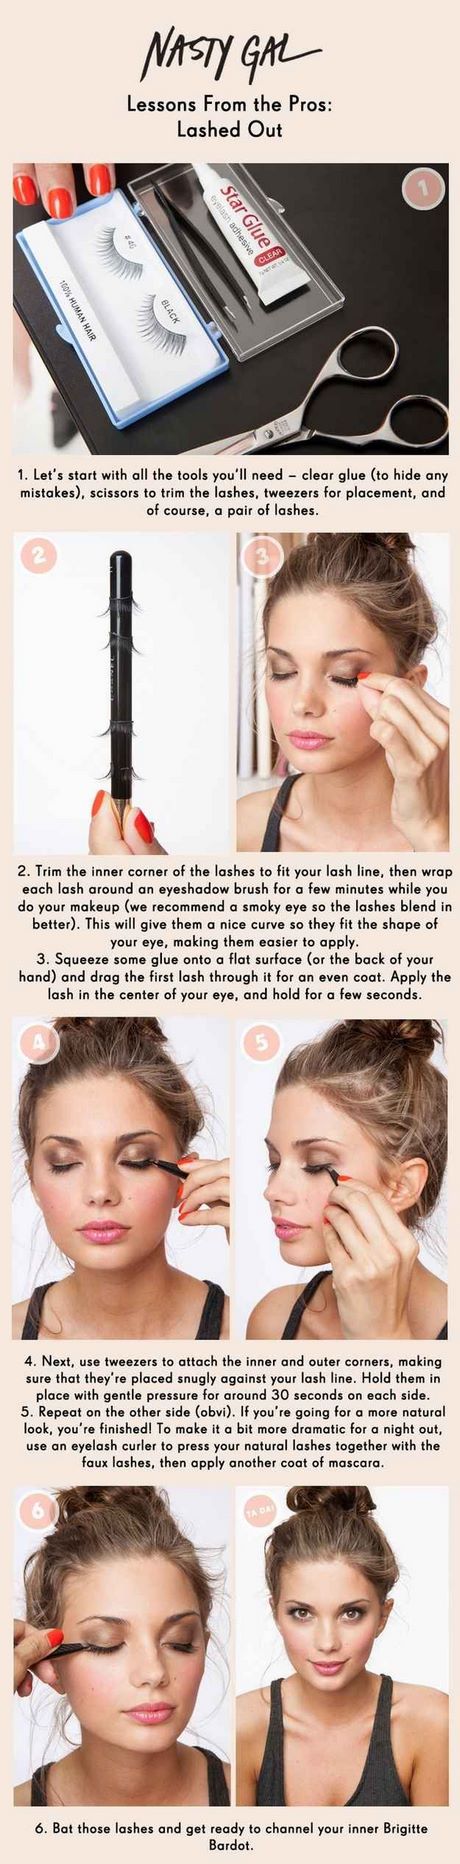 buzzfeed-makeup-tutorial-26 Buzzfeed make-up tutorial